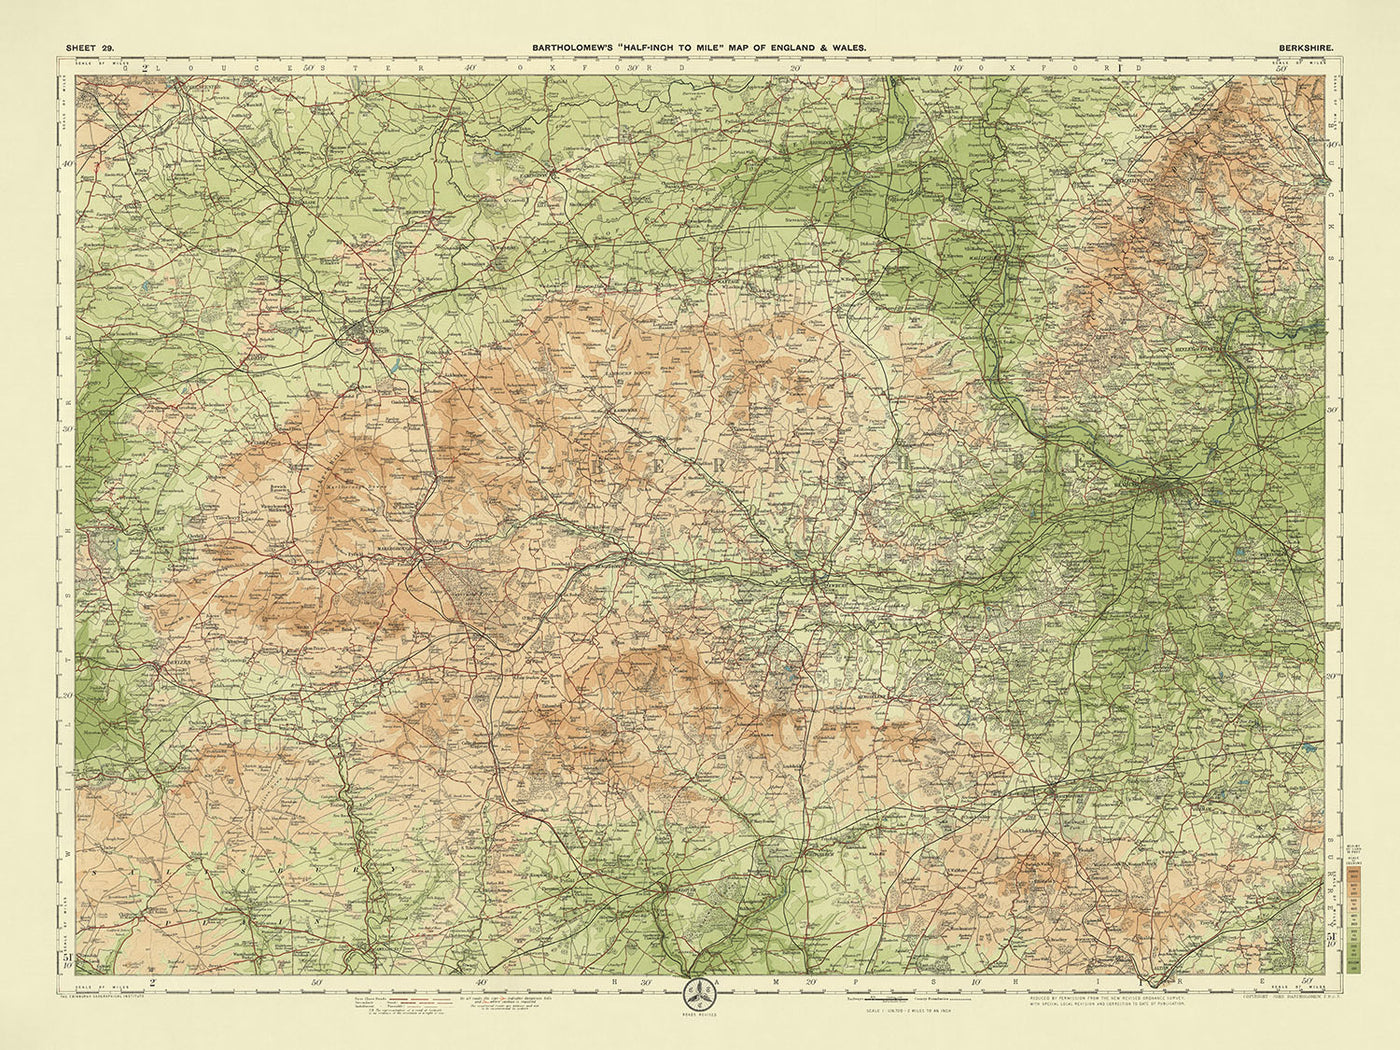 Old OS Map of Berkshire by Bartholomew, 1901: Reading, Windsor, Thames, Windsor Castle, Downs, Chilterns